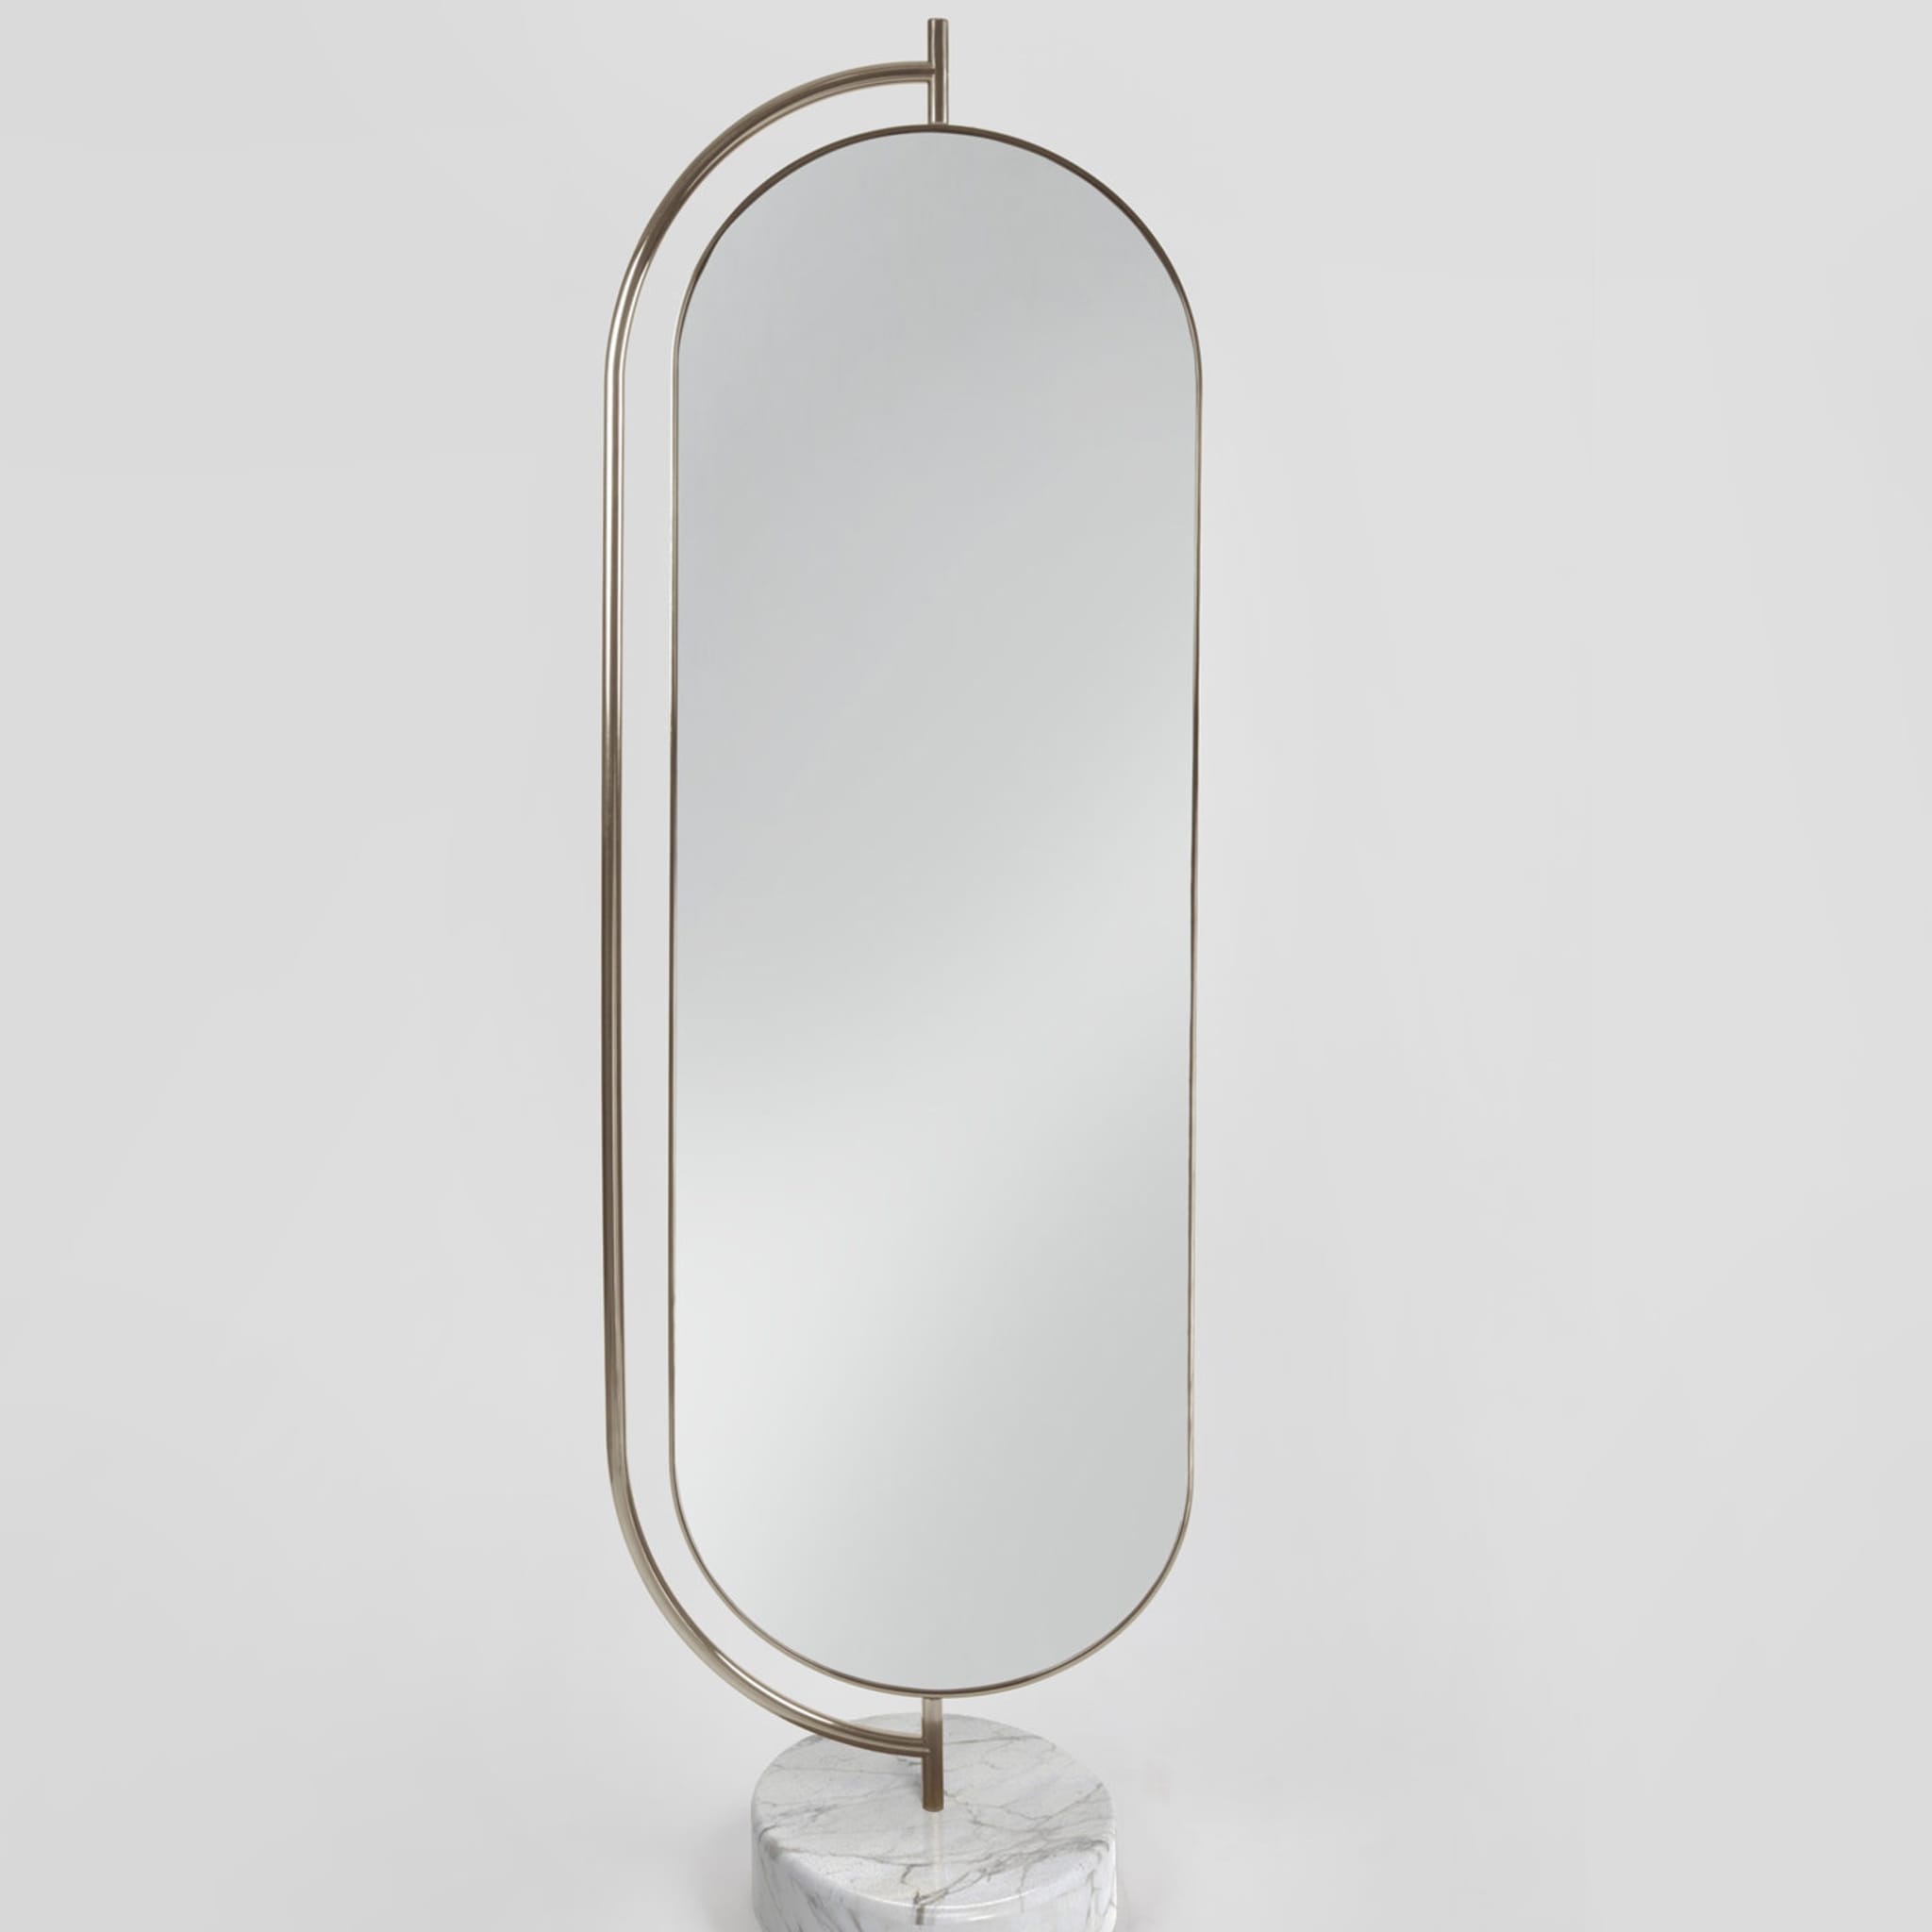 Giove Mirror with Calacatta Oro Marble - Alternative view 1